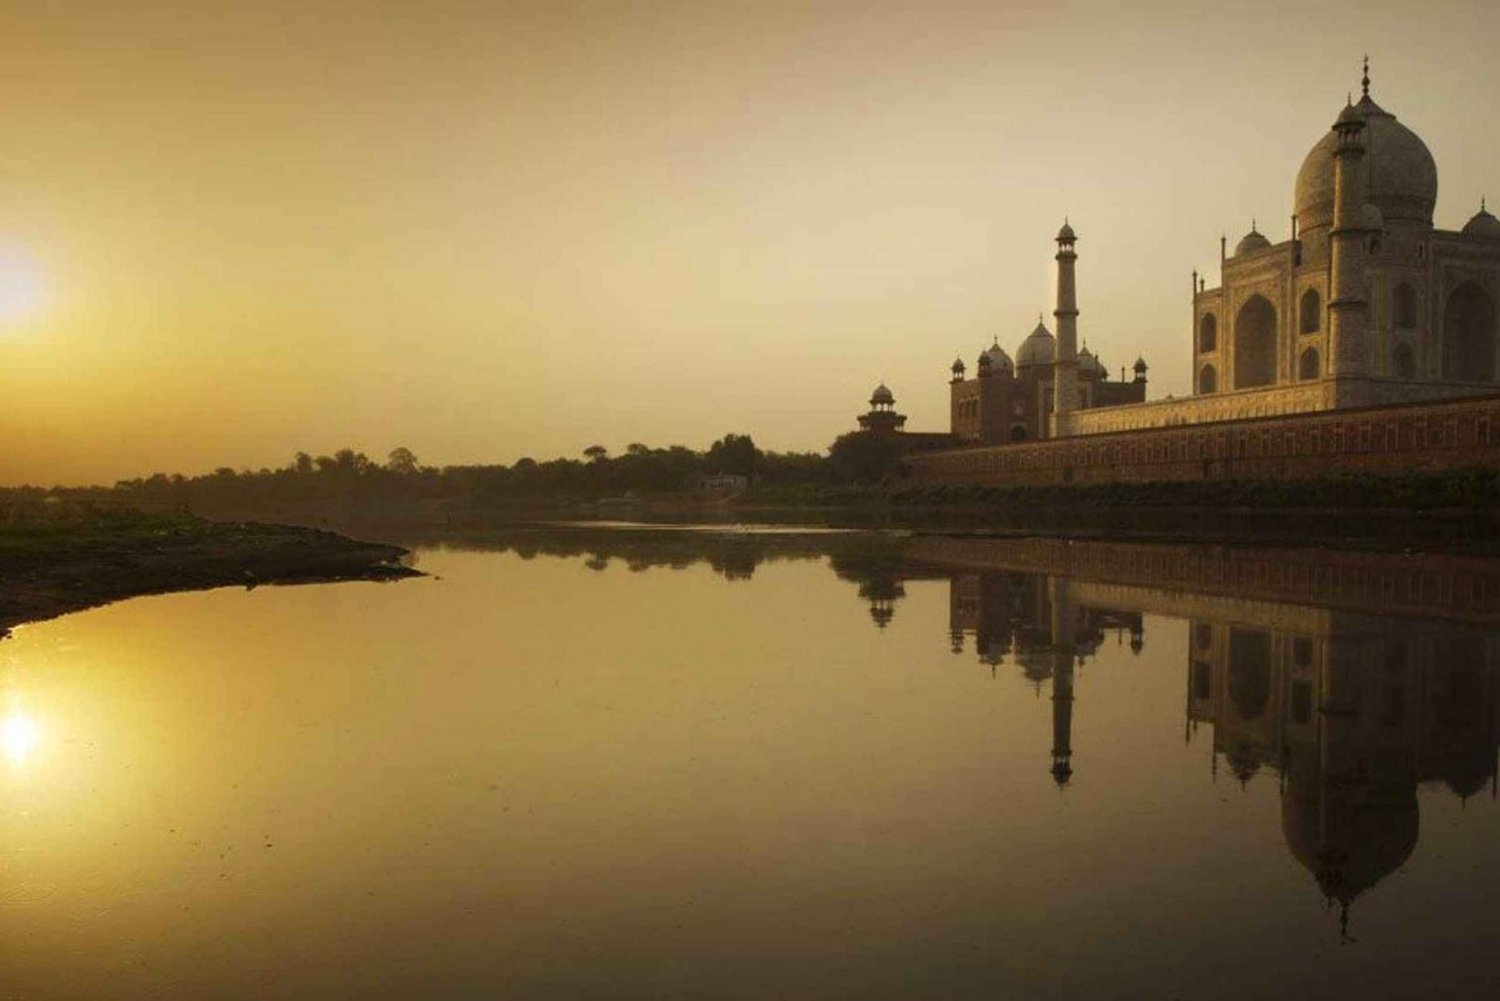 From Mumbai: Agra Taj Mahal Sunrise with Lord Shiva Temple